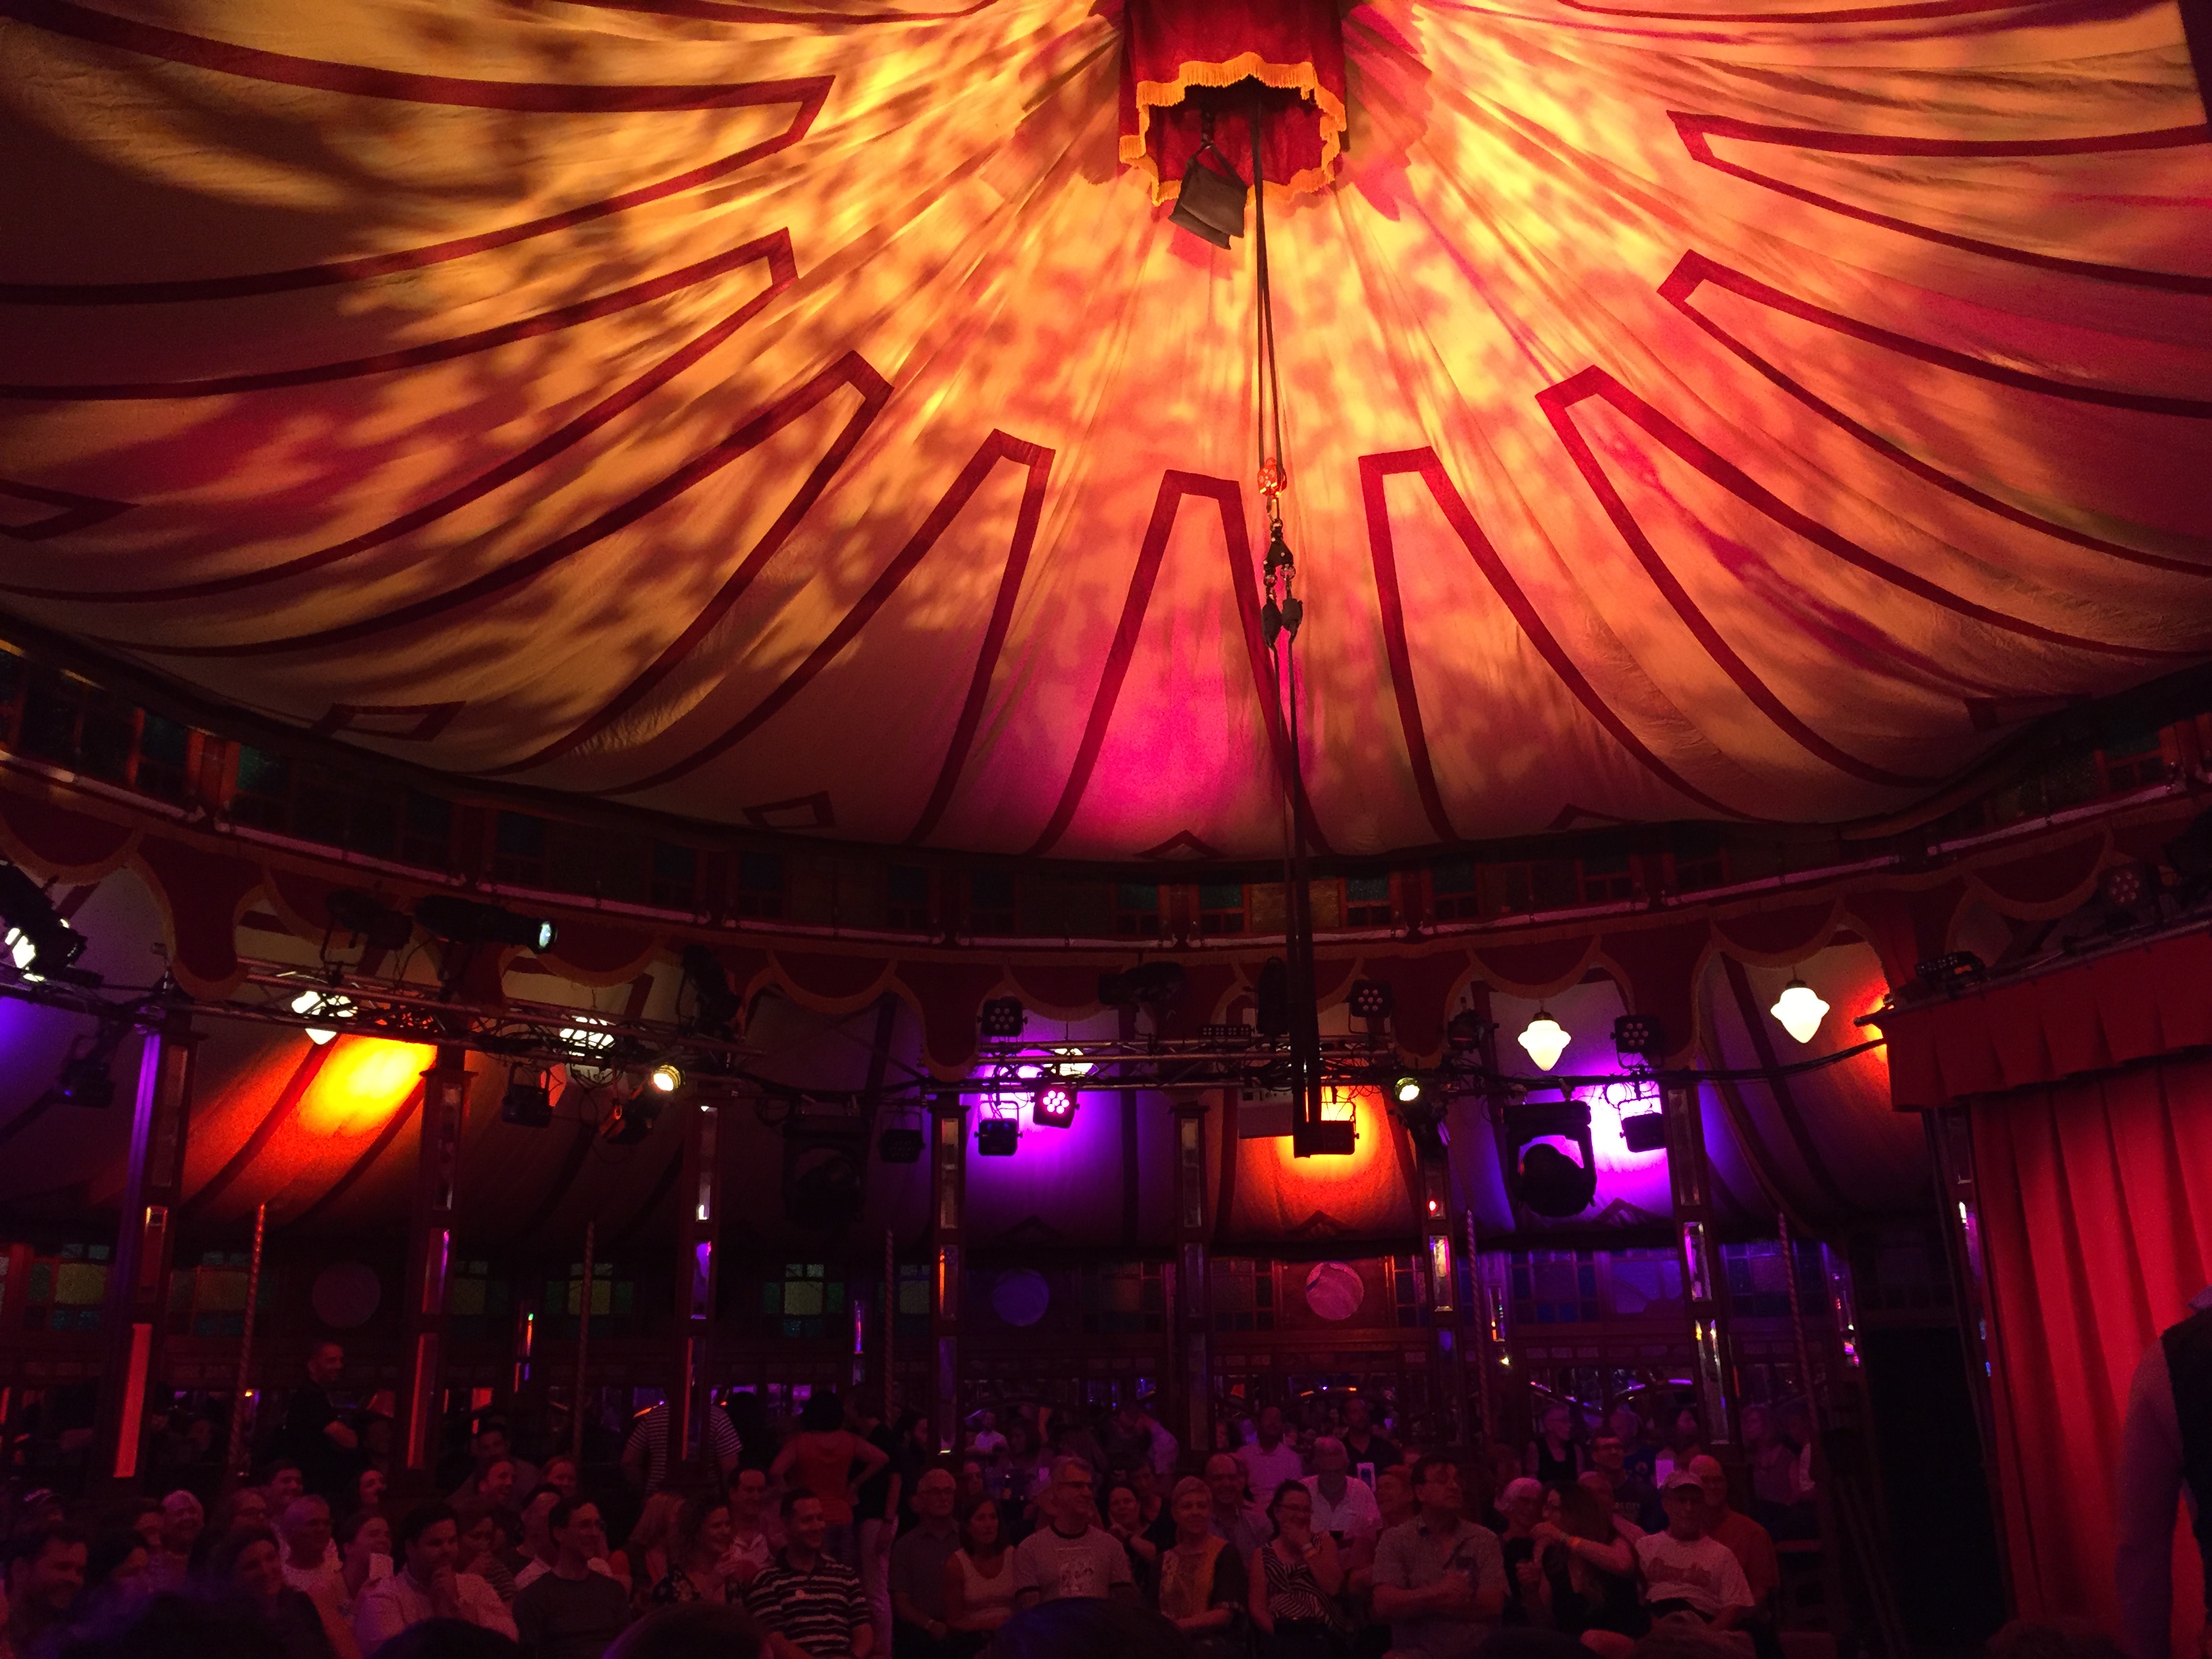 inside a tent a spiegeltent-fringe fest, lit with orange and purple spotlights